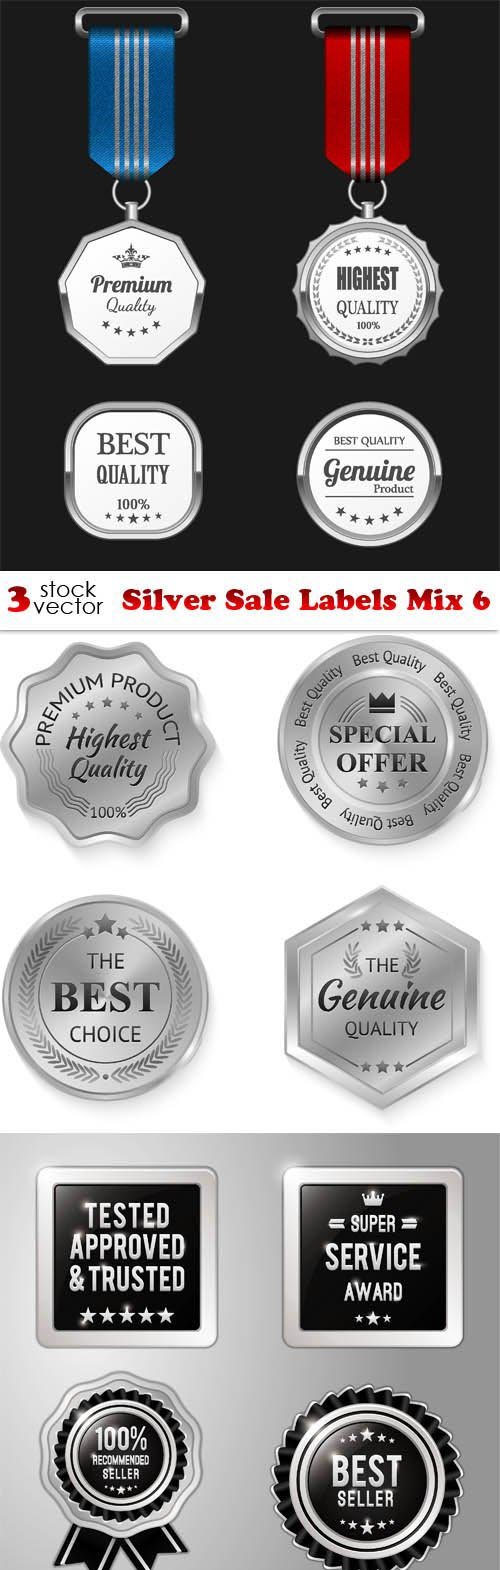 Vectors - Silver Sale Labels Mix 6